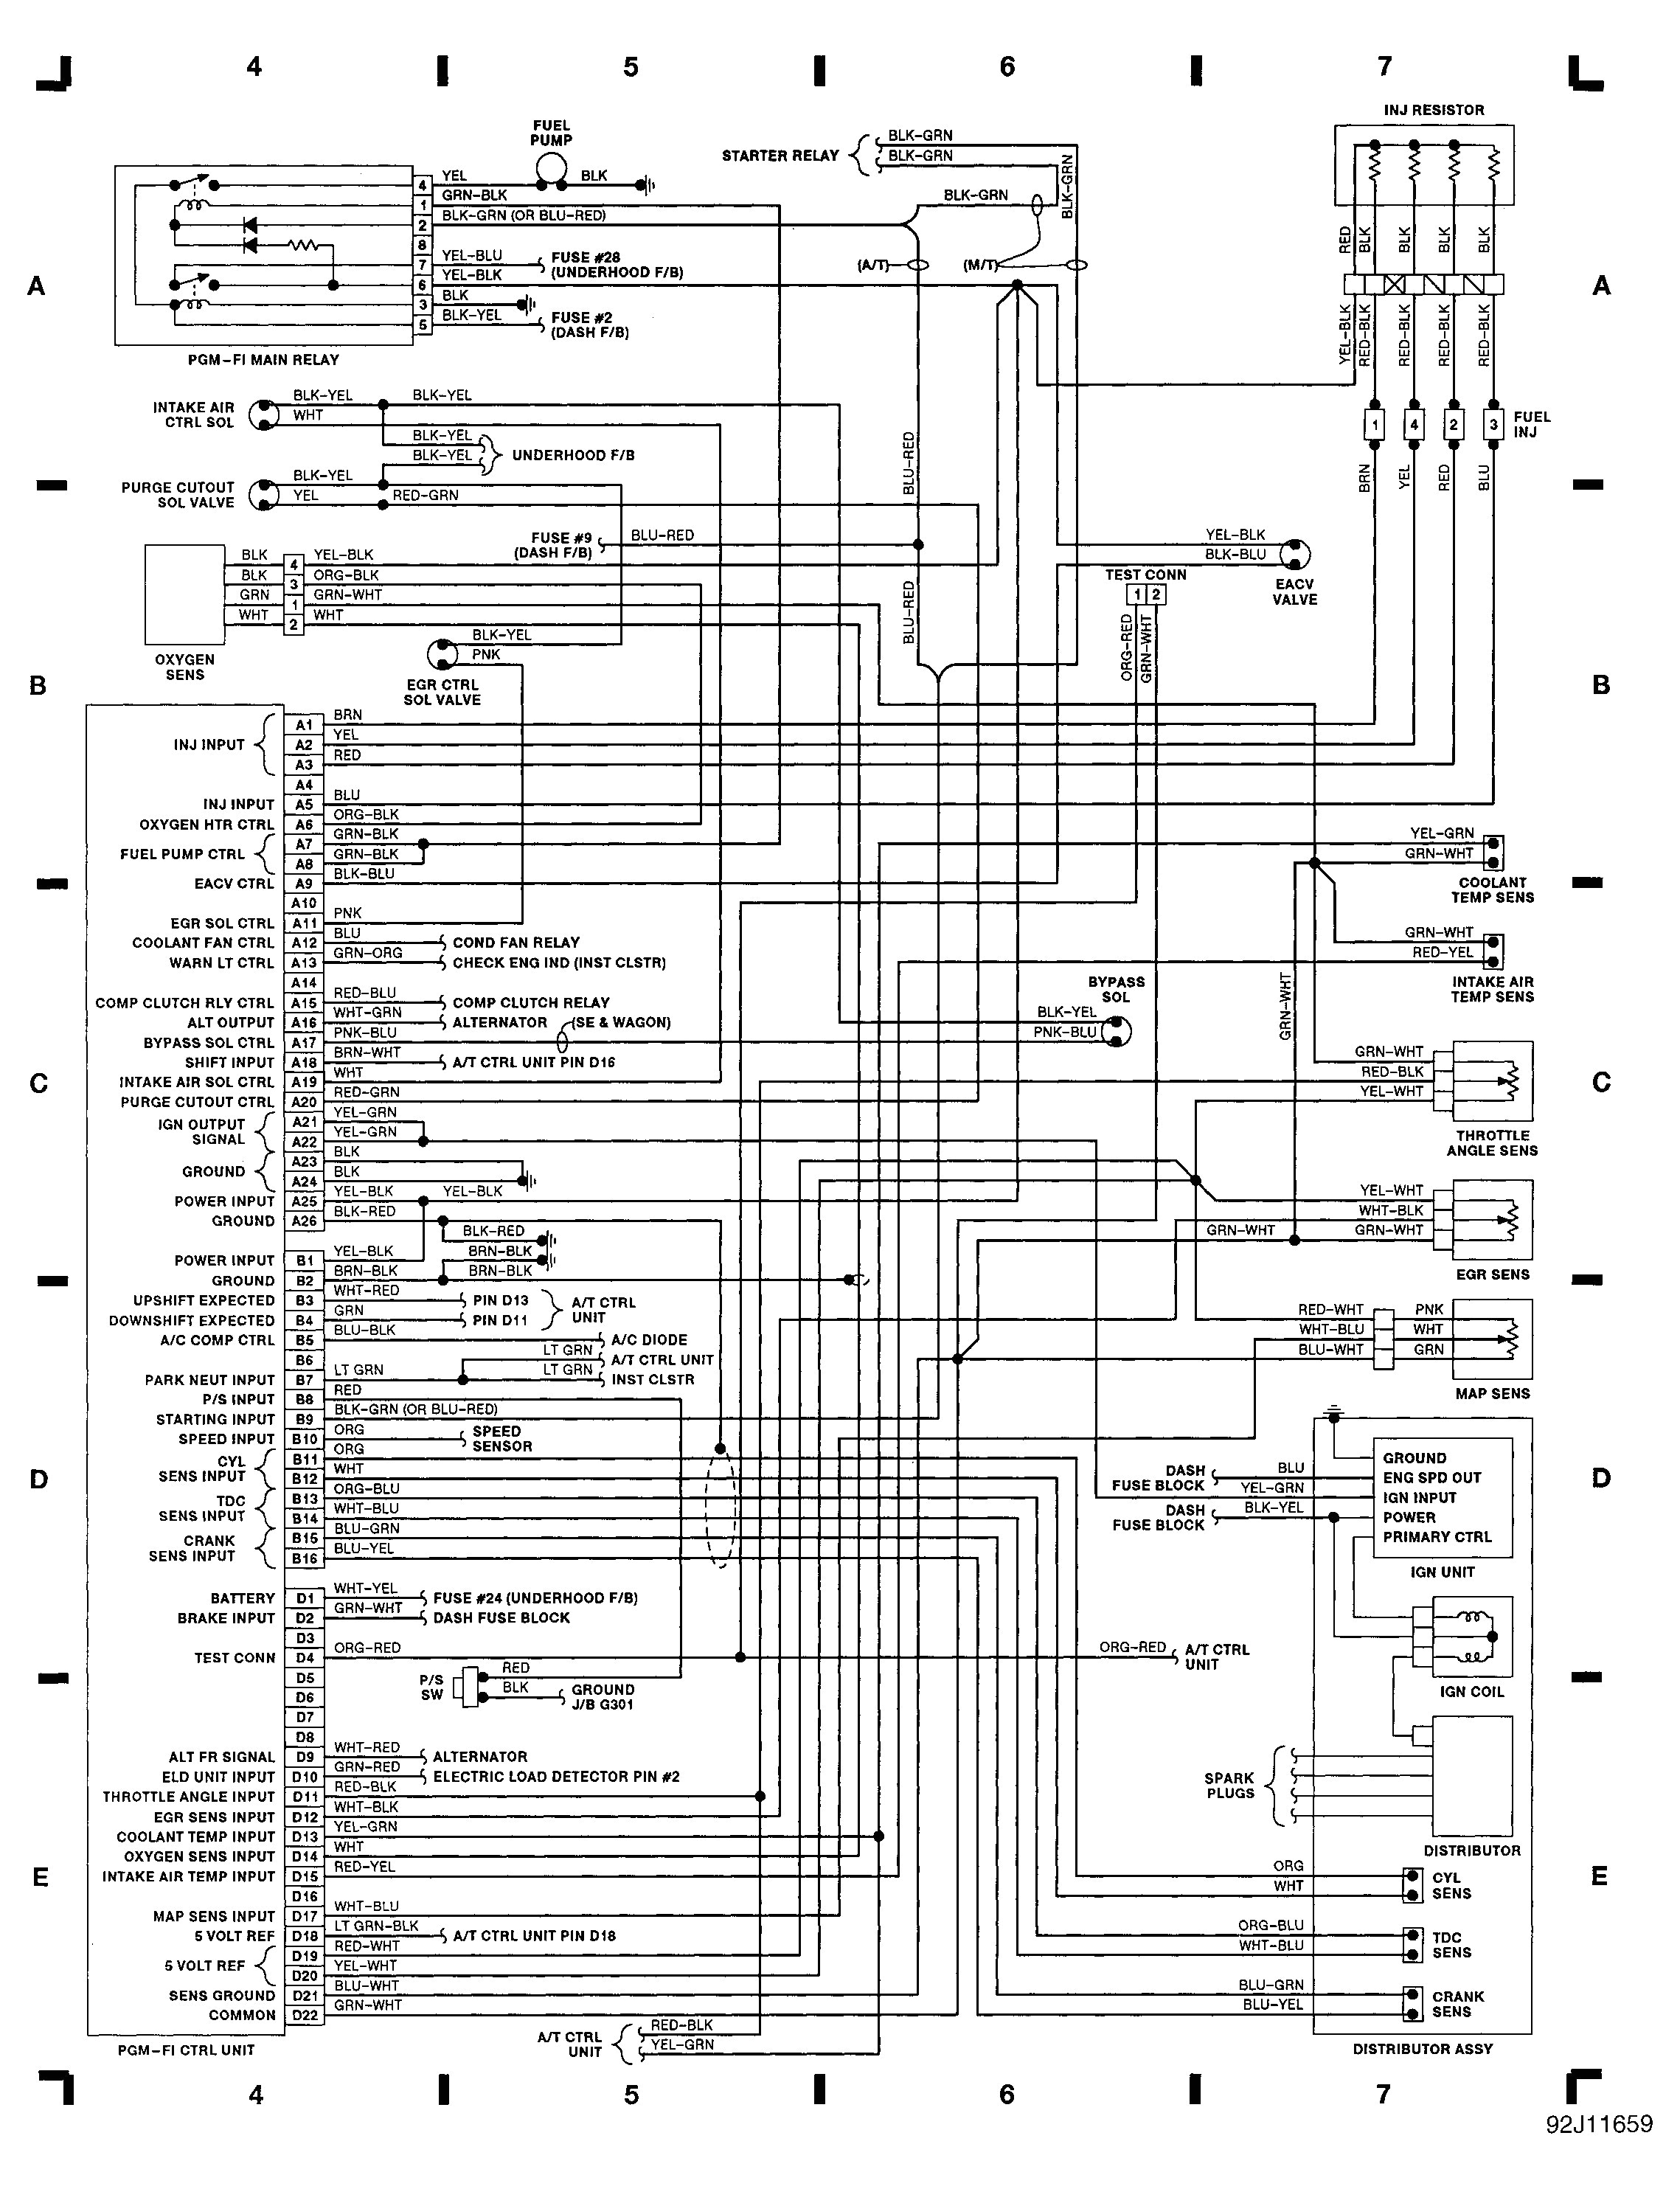 wiring diagram for 1999 honda accord wiring diagram paper honda accord 1999 radio wiring diagram wiring